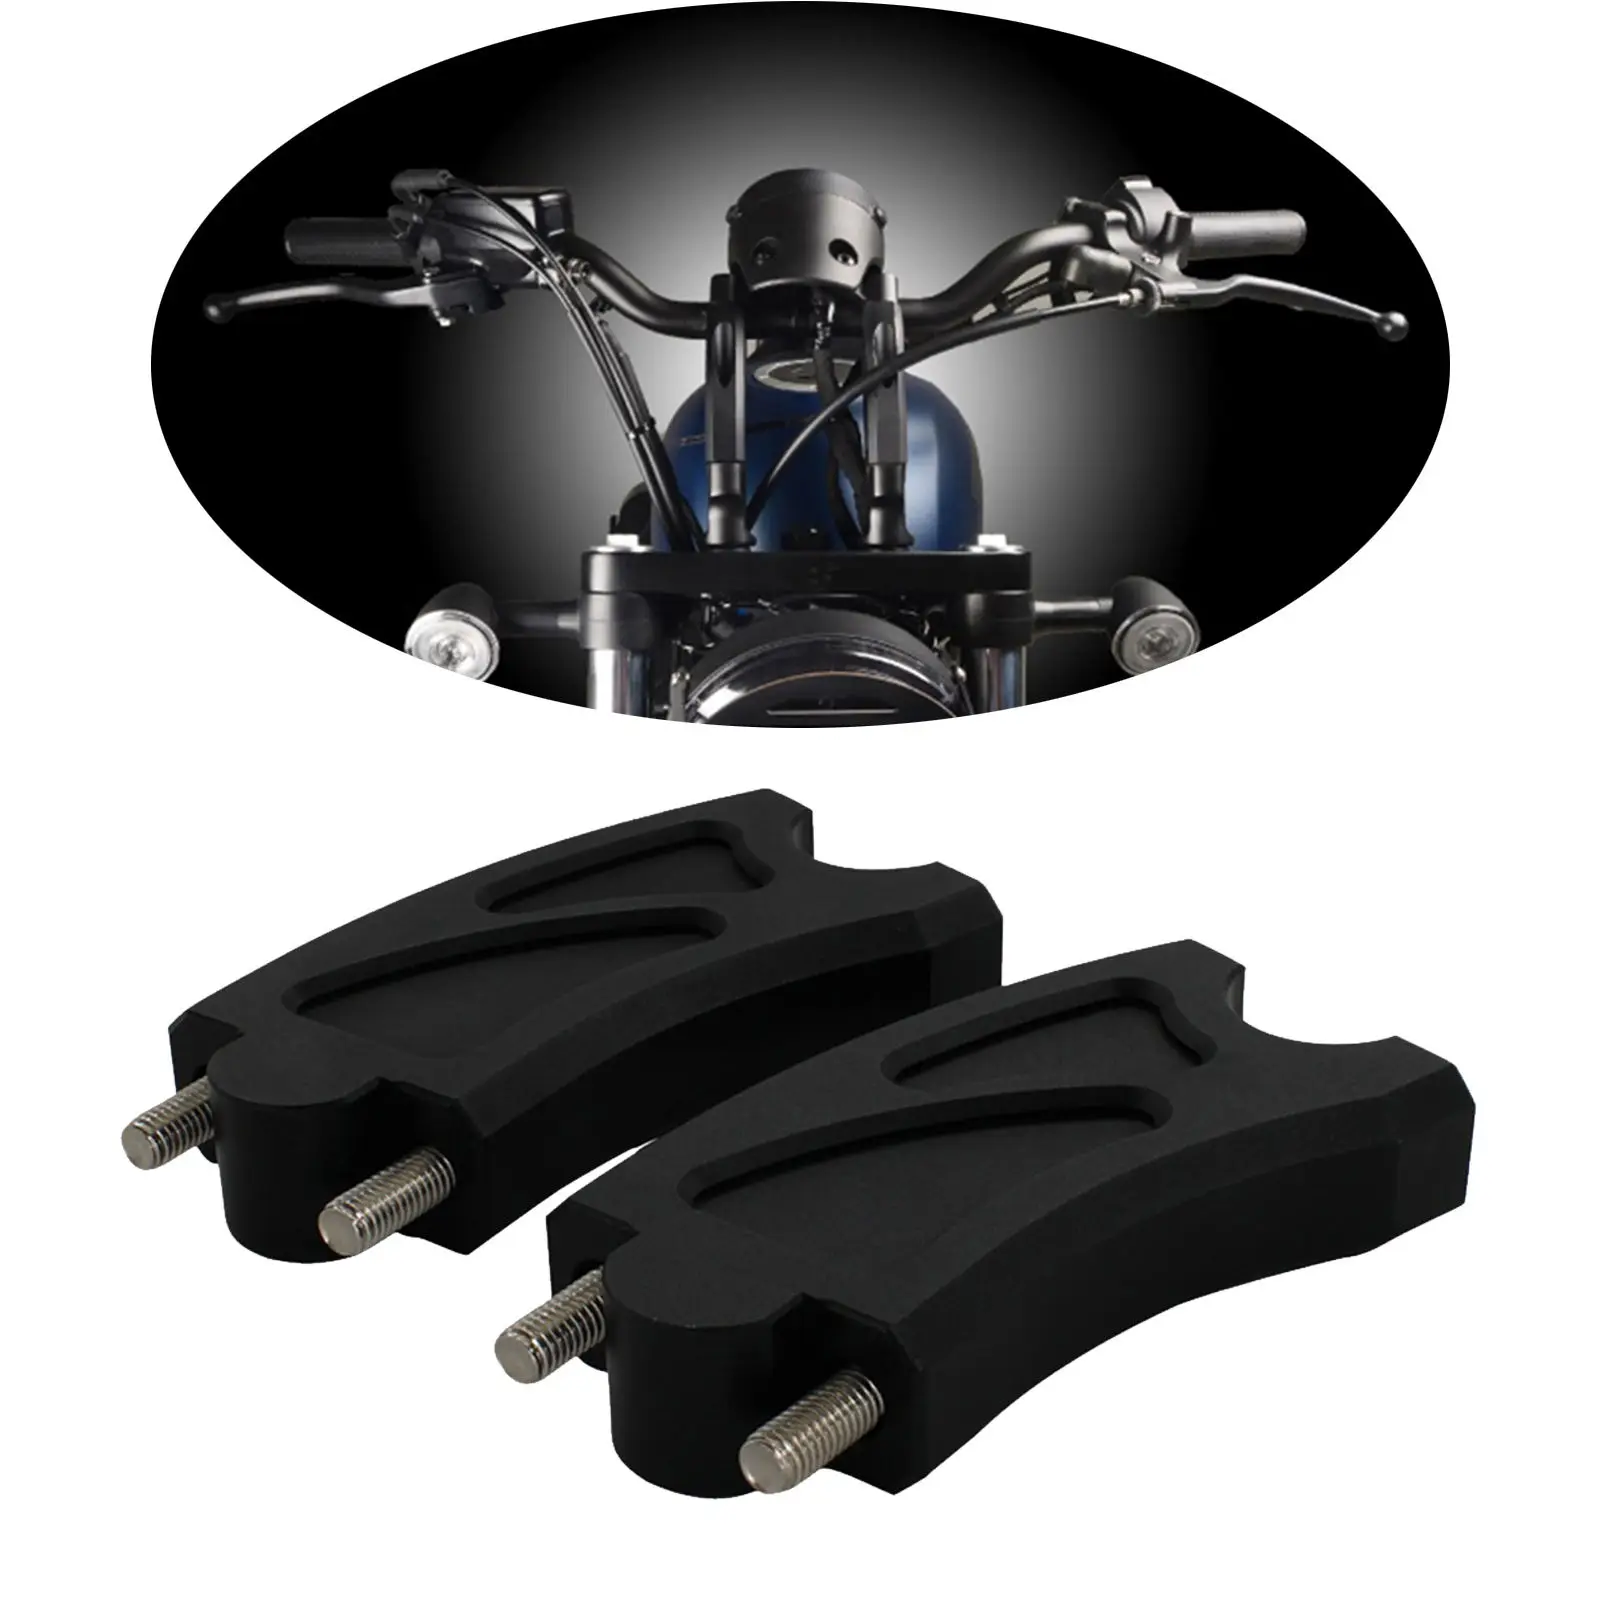 Universal Motorcycle Handlebar Riser Lift Clamp Adapter Accessory Kit for Honda Rebel CMX 500/300, CMX500, CMX300